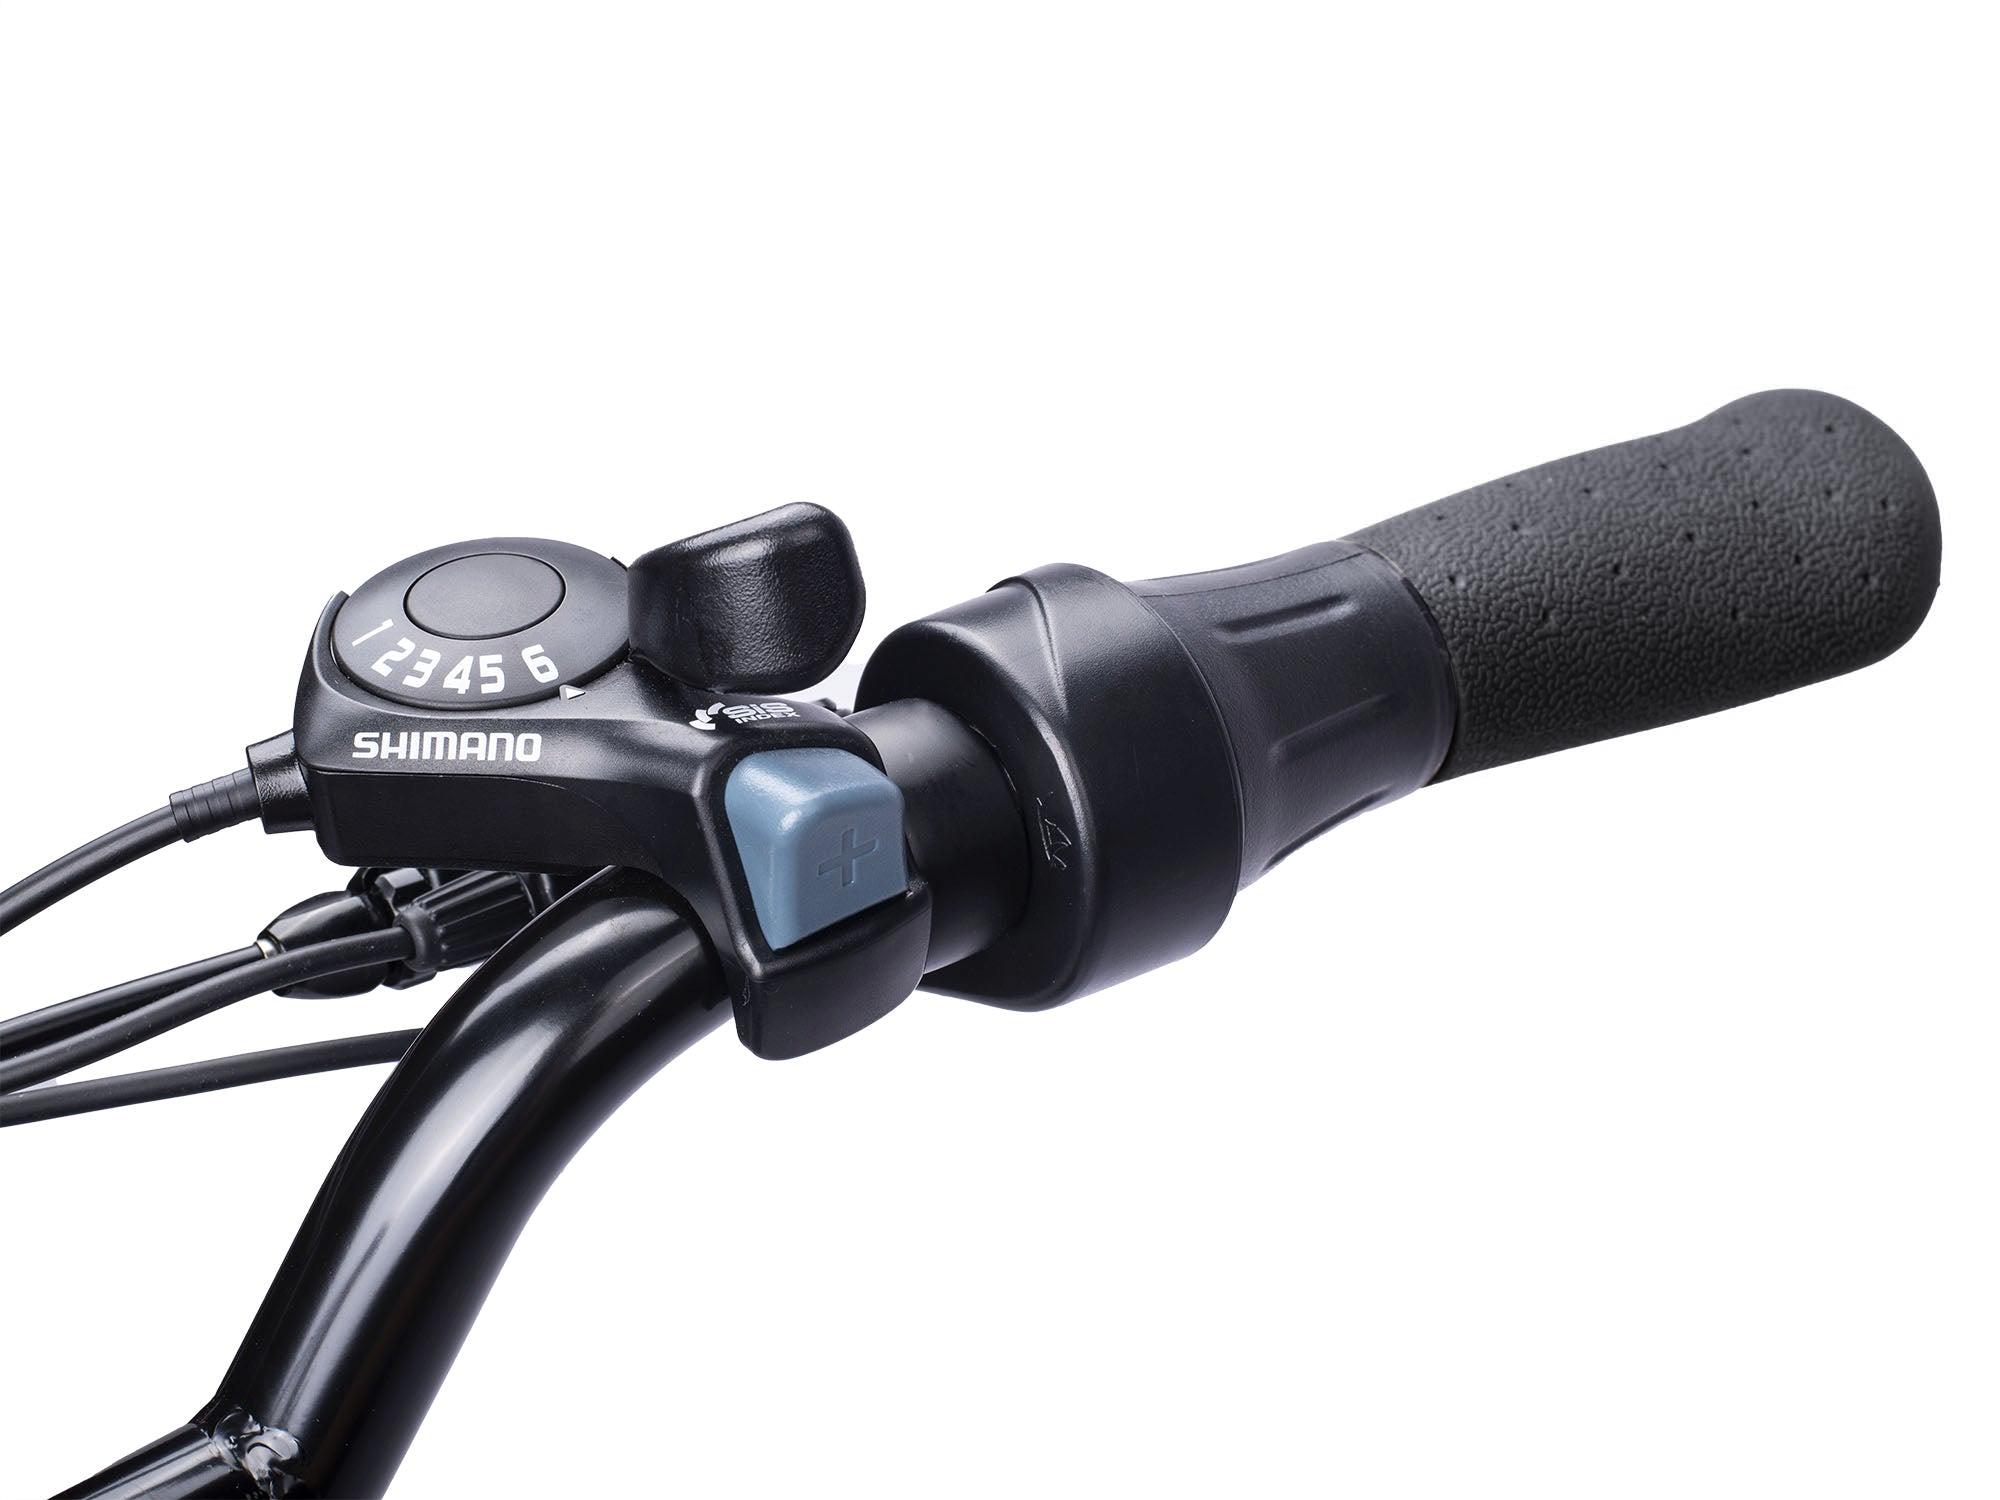 macfox-mini-swell-electric-bike-functions-shimano-gear